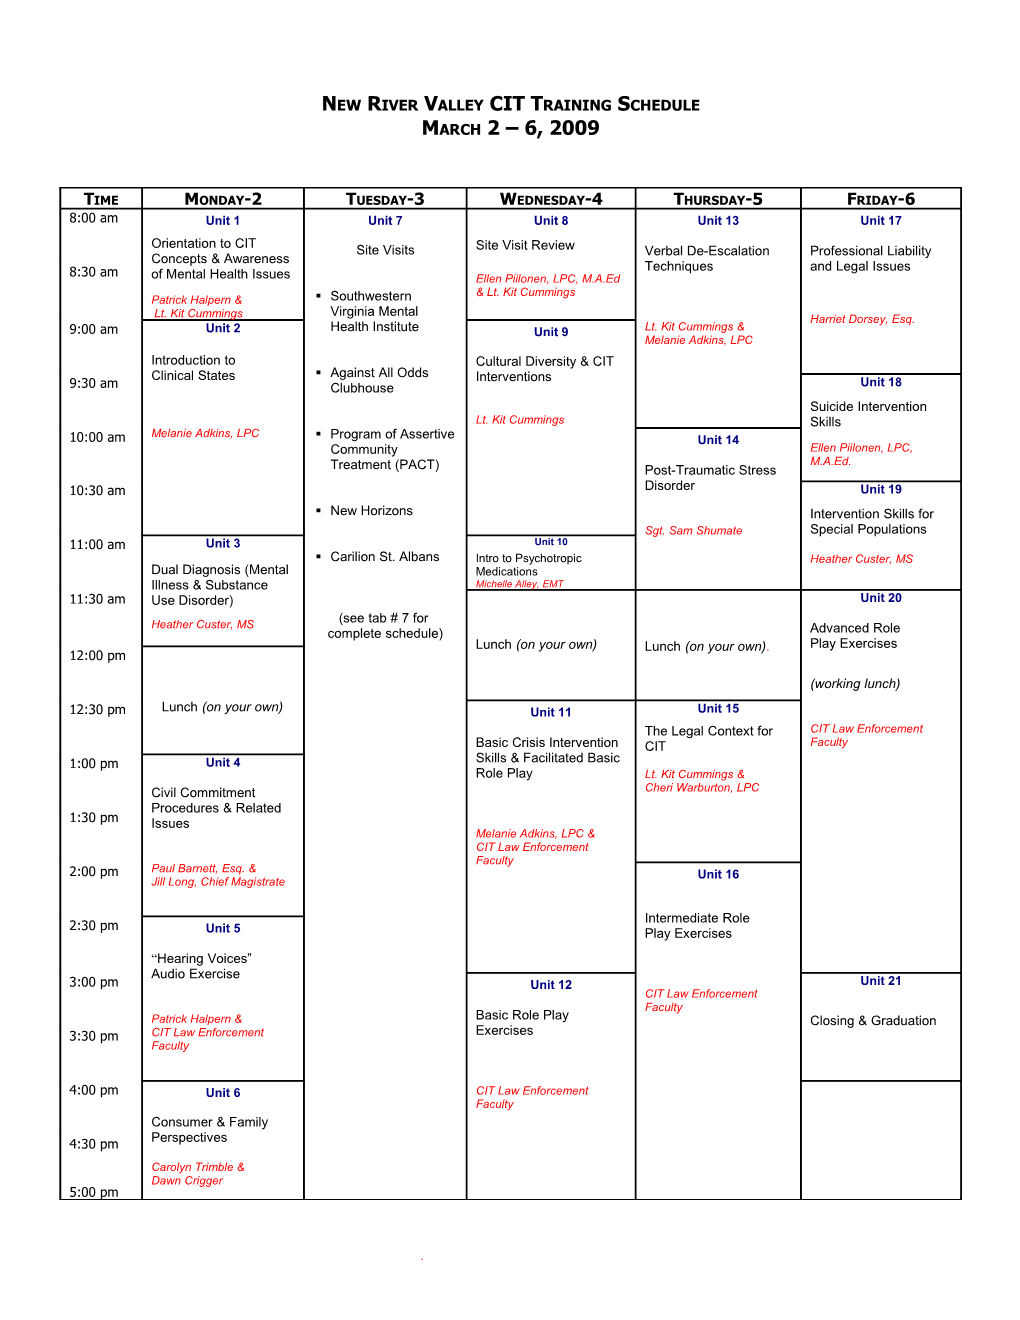 New River Valley Cit Training Schedule